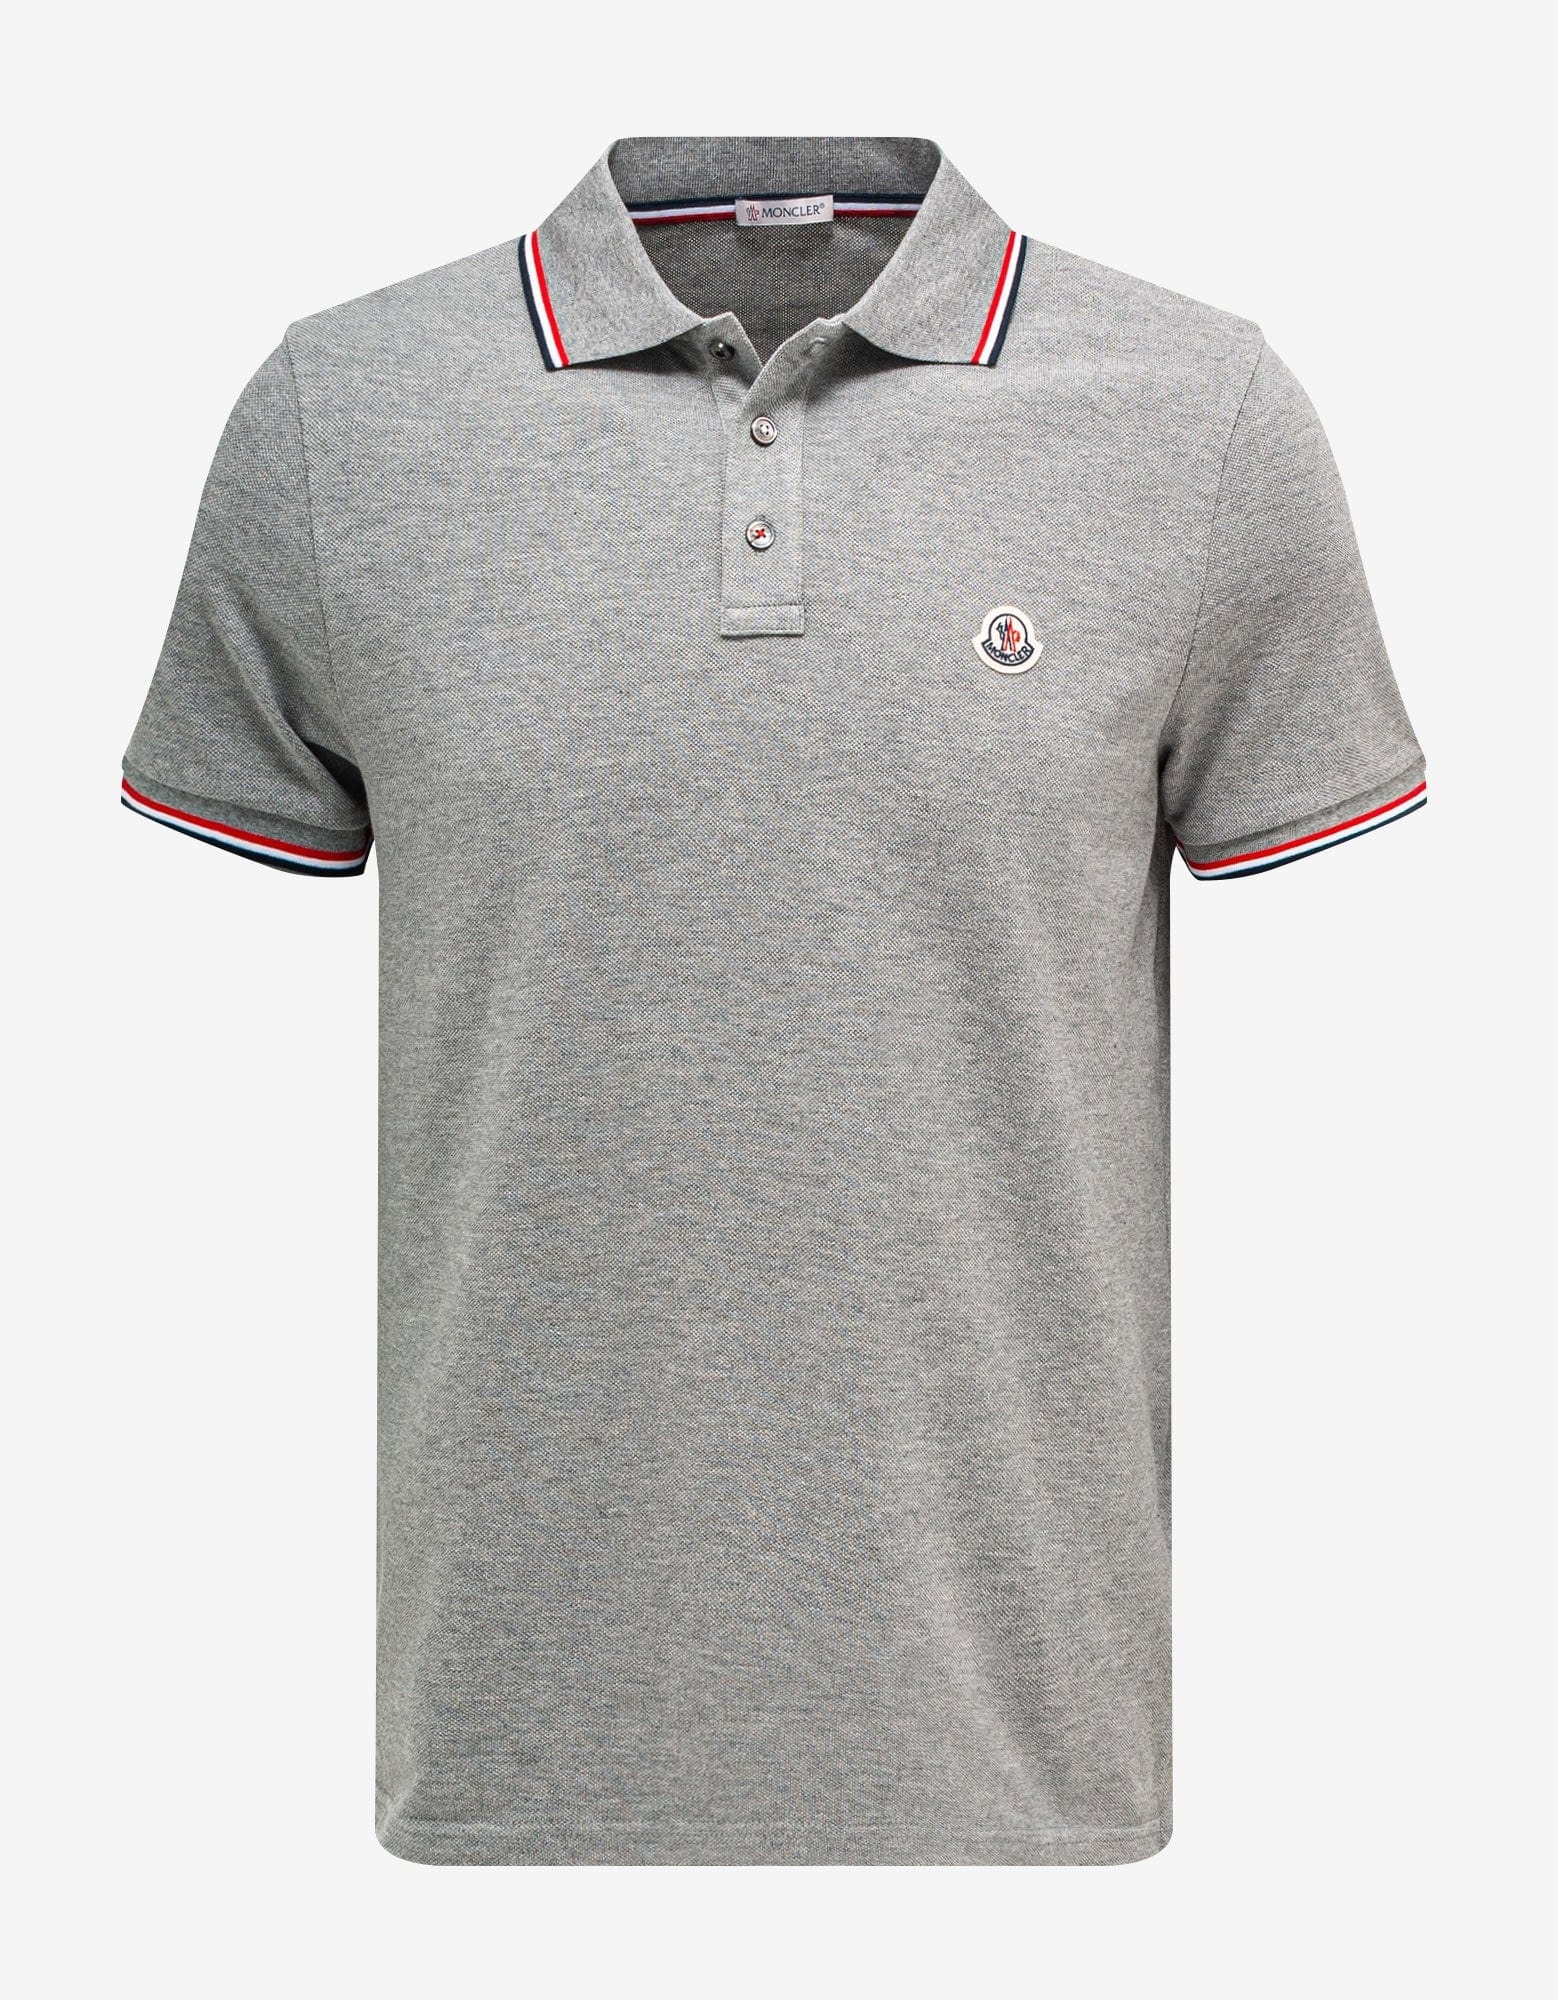 Grey Tricolour Trim Polo T-Shirt - 1